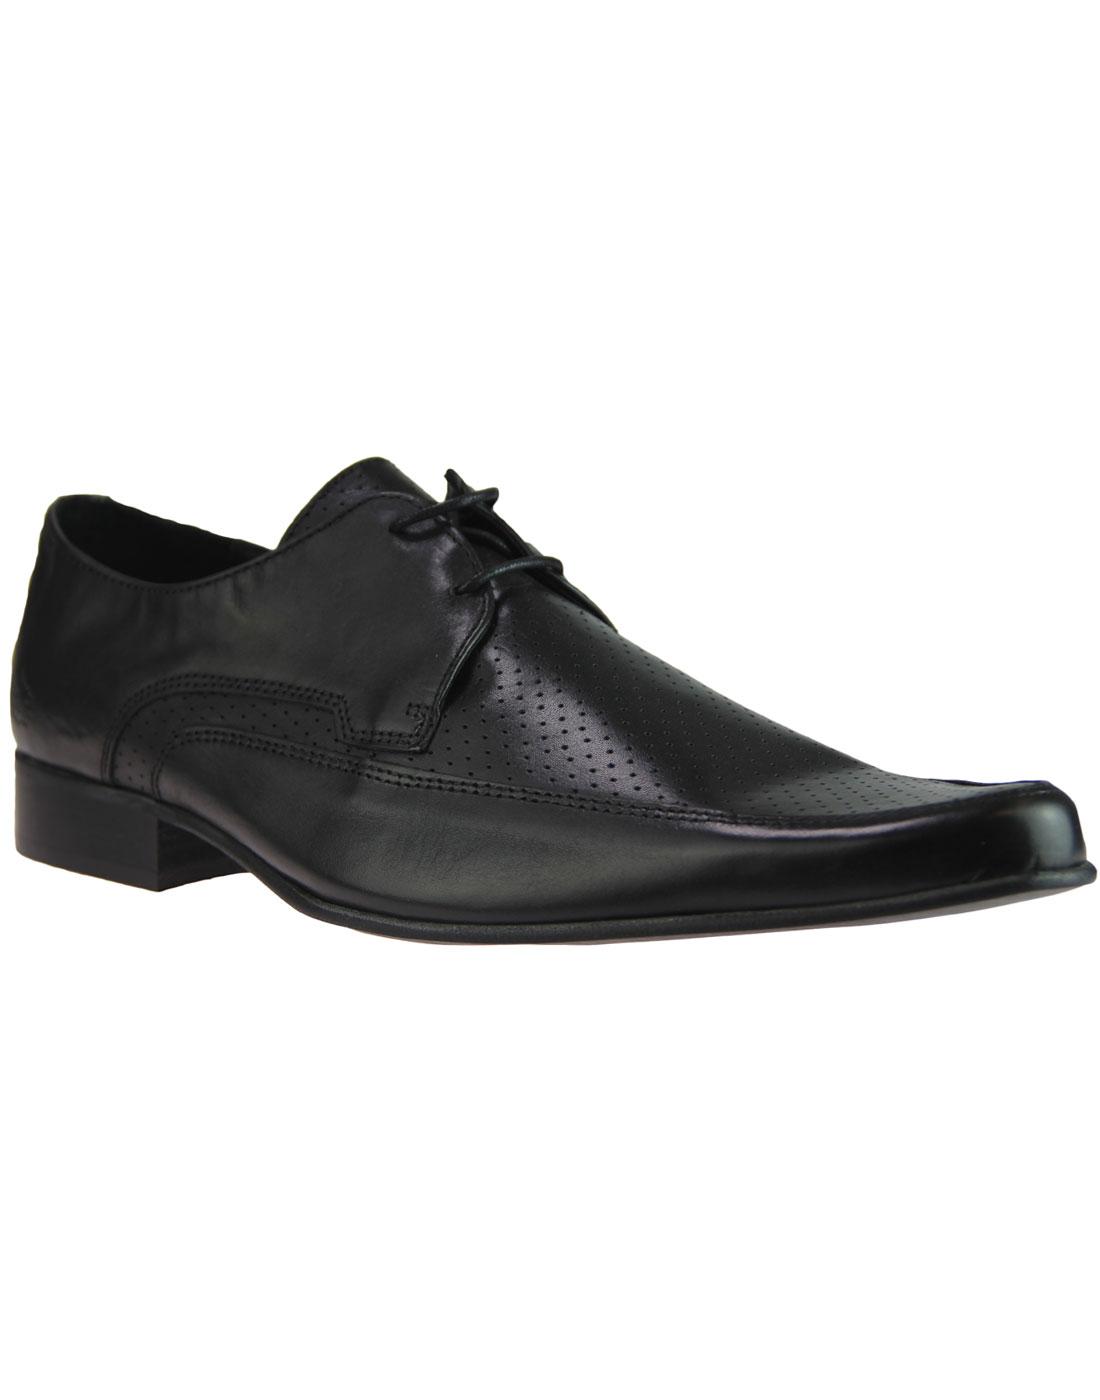 IKON Original The Jam Shoe All Black Mod Shoes 